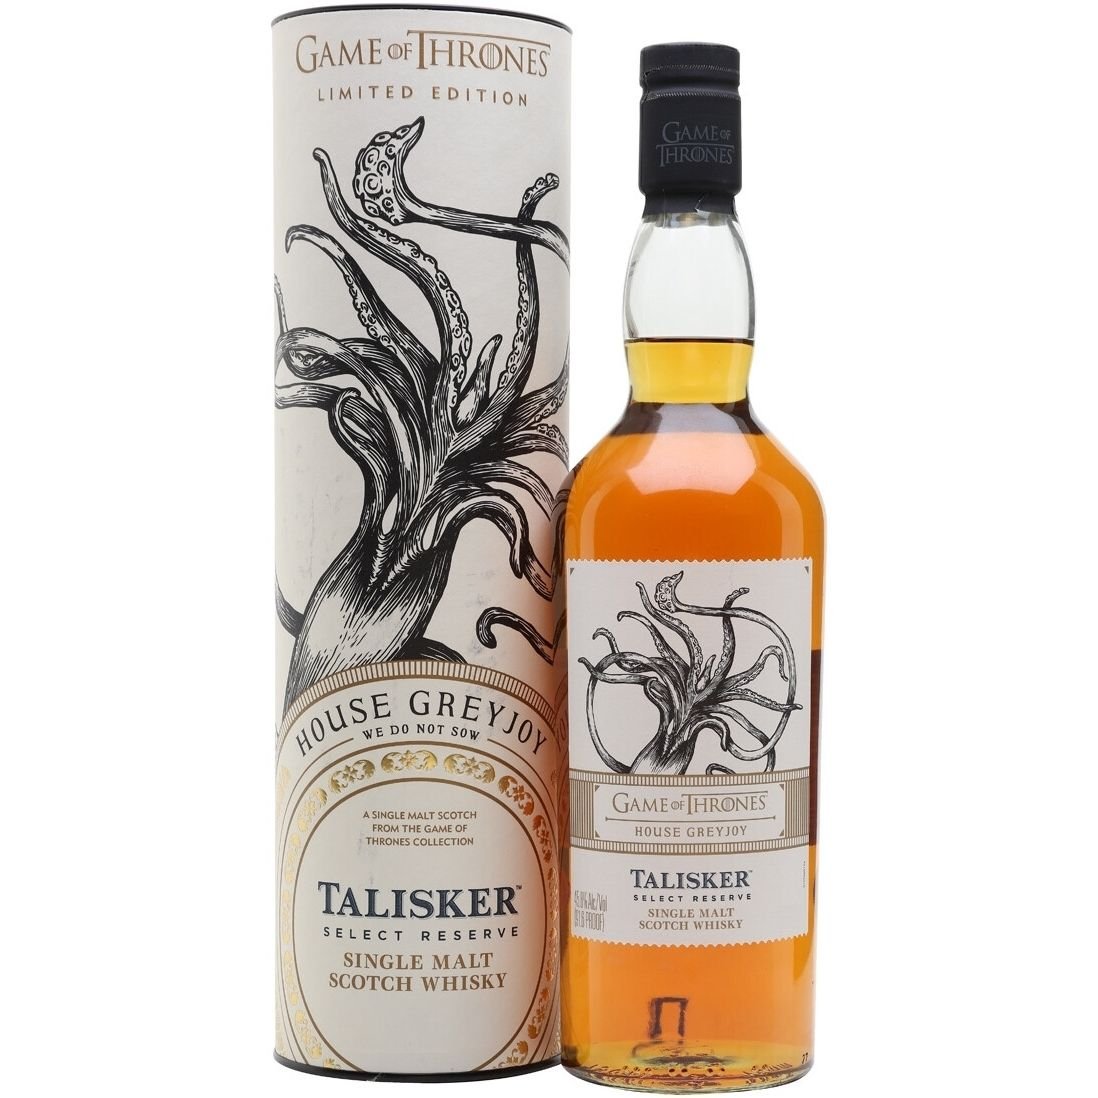 Віскі Talisker Game of Thrones House Greyjoy Single Malt Scotch Whisky 45.8% 0.7 л, у подарунковій упаковці - фото 1